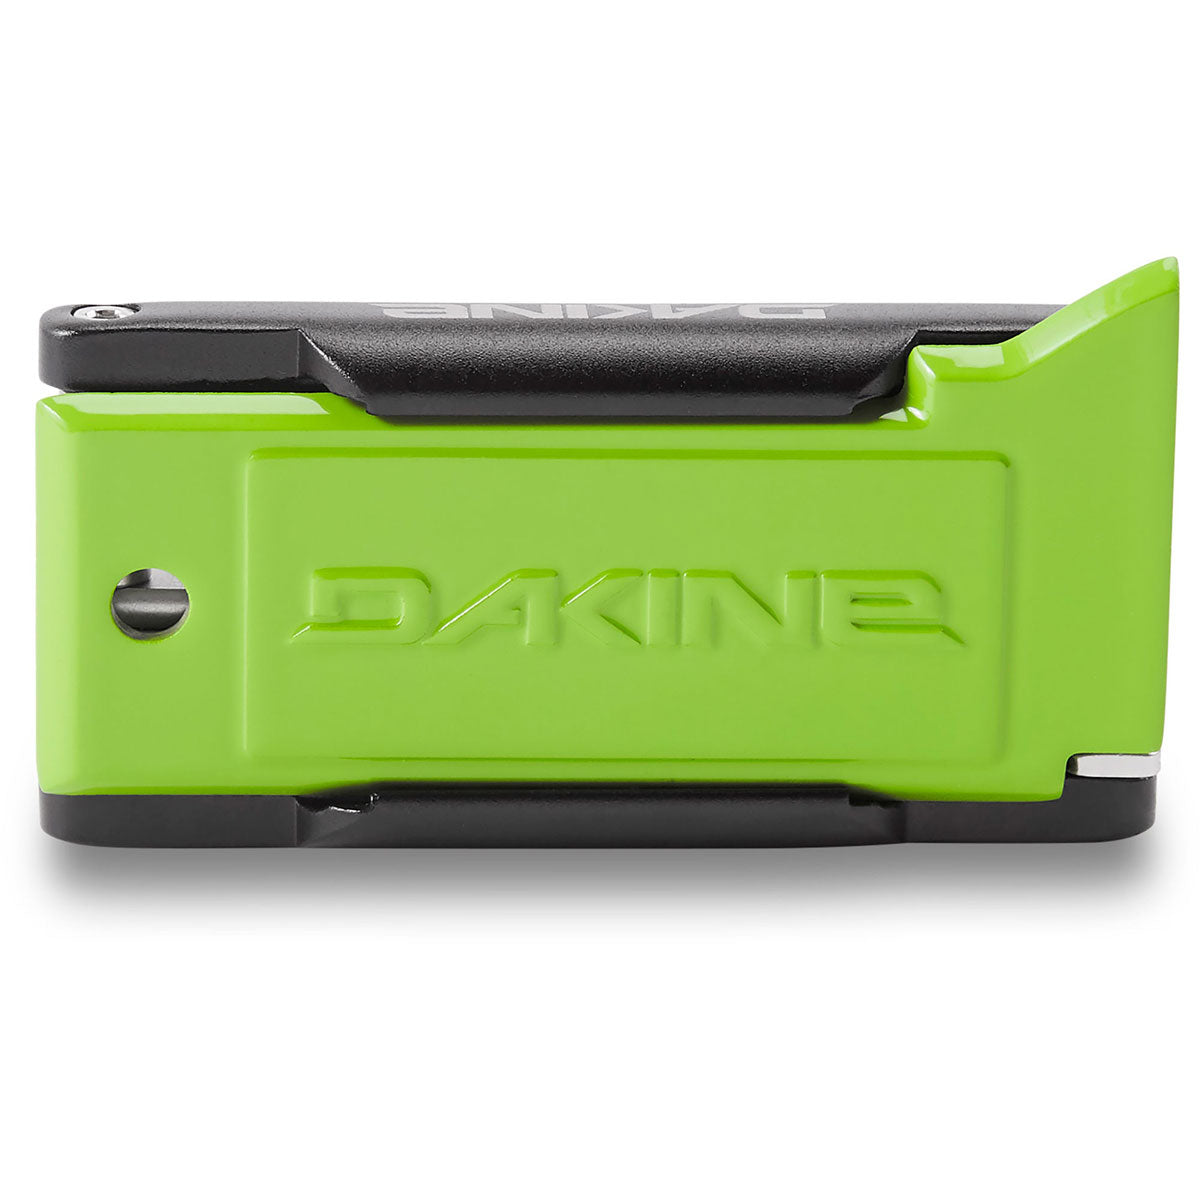 Dakine Bc Snowboard Tools & Locks - Green image 2